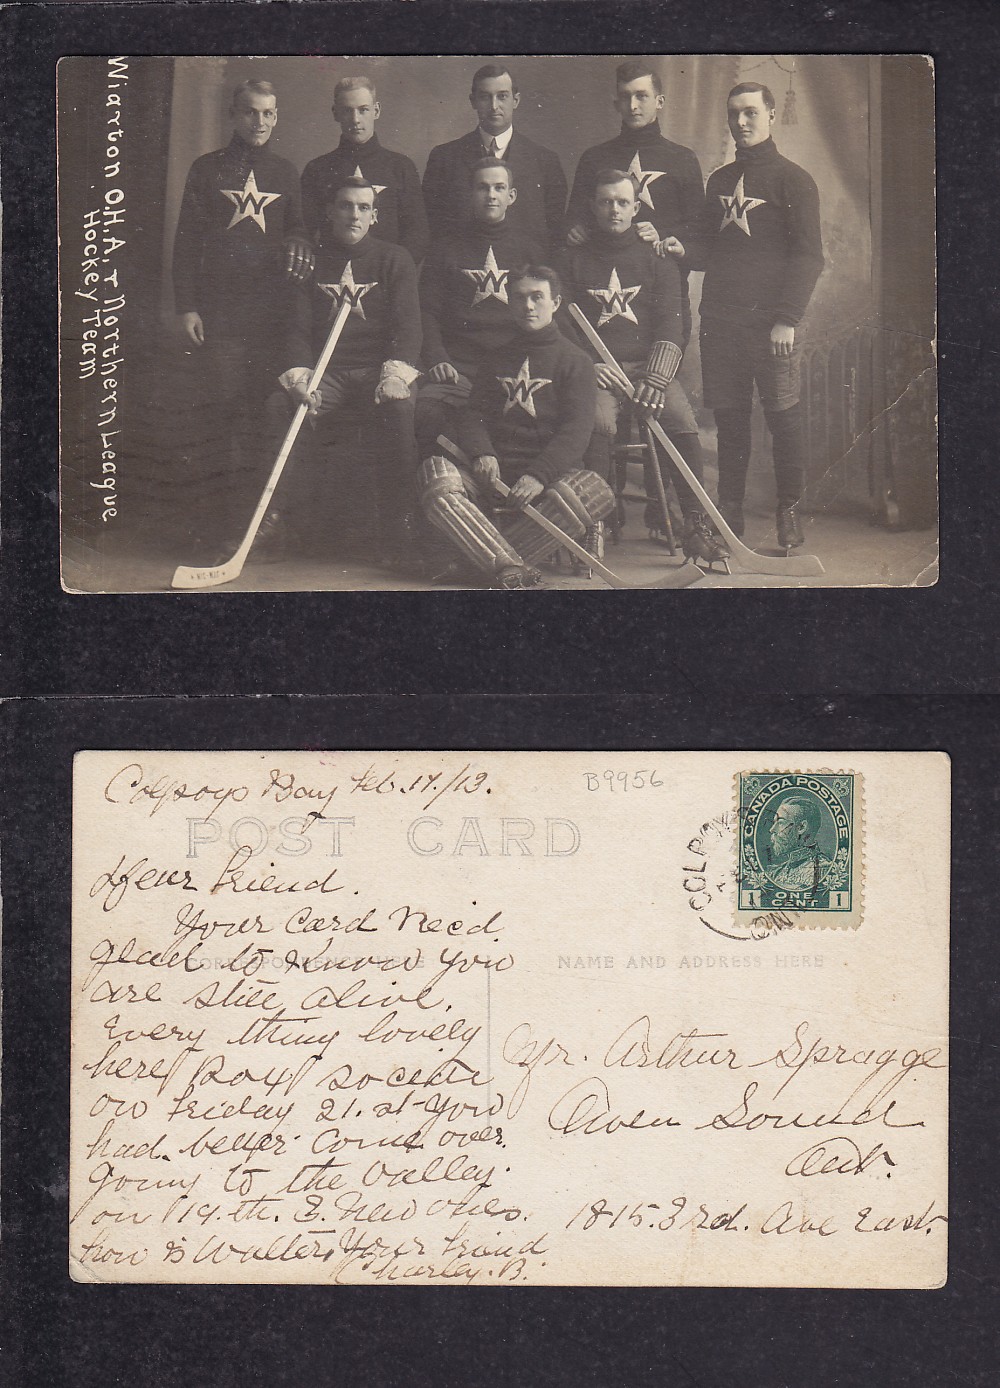 1913 WIARTON HOCKEY TEAM POST CARD photo